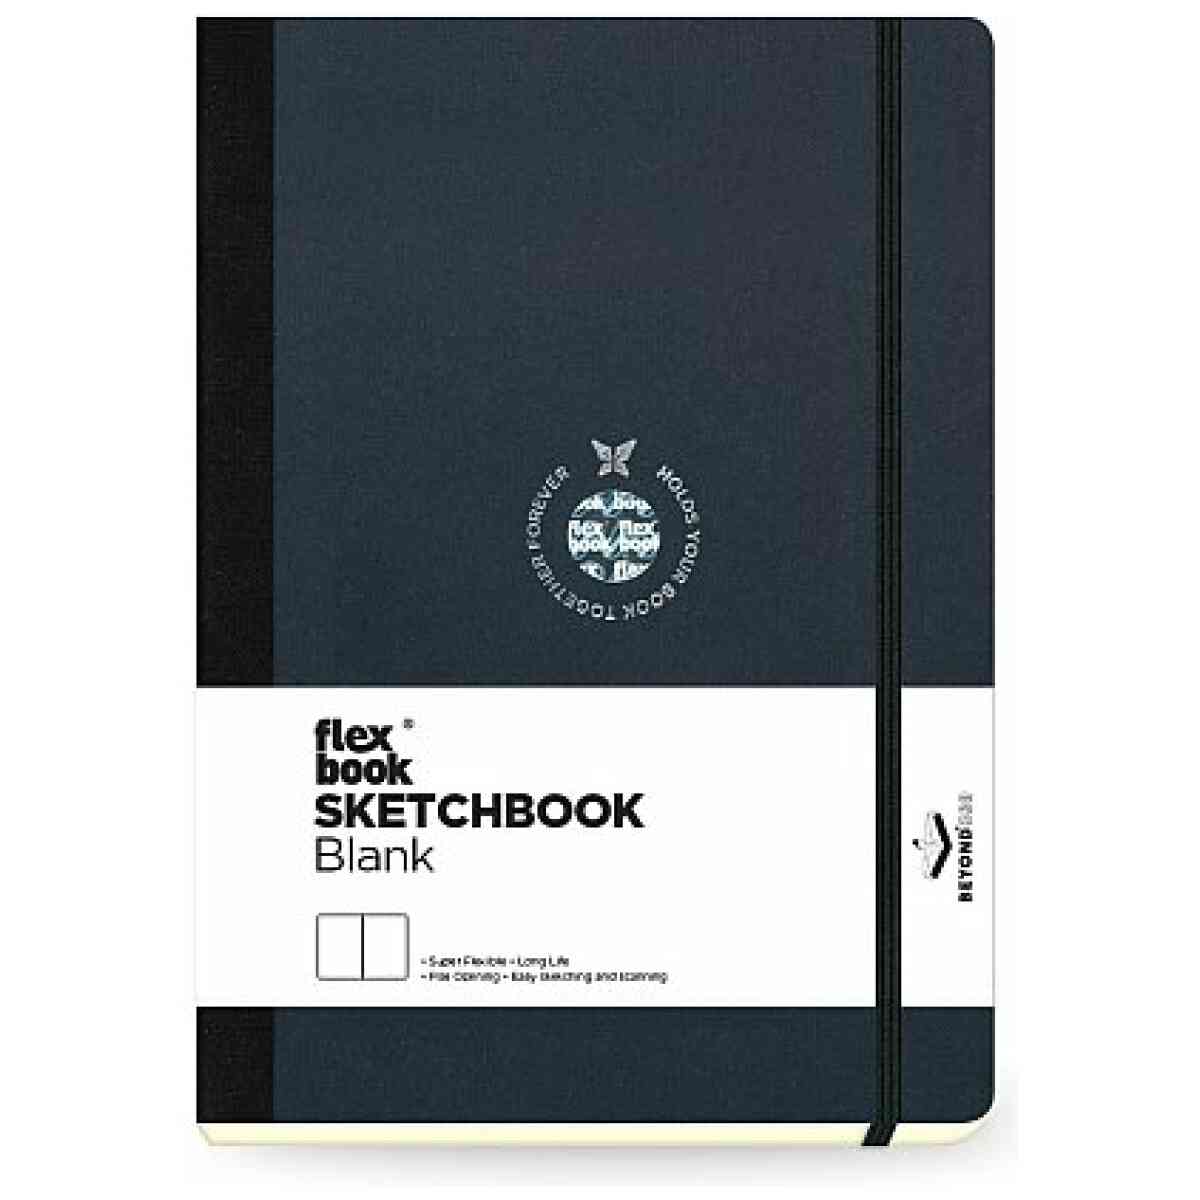 flexbook sketchbook black